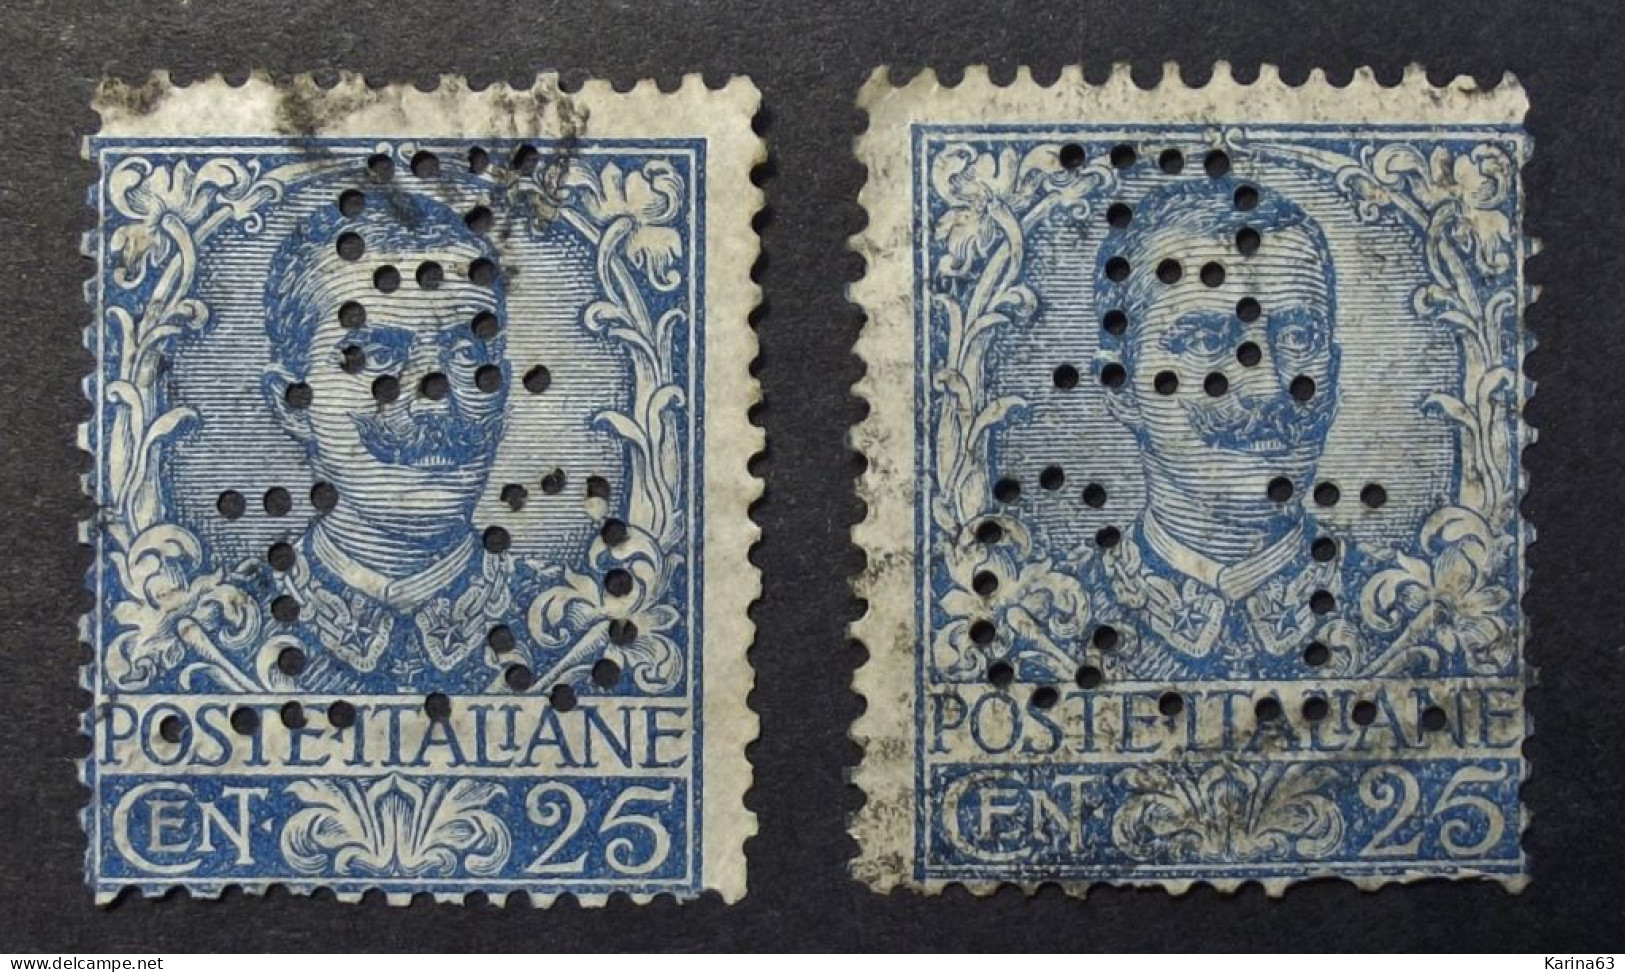 Italia - Italy - 1901  -  Perfin - Lochung -  B C I - Banco Commercial Italiana  -  Cancelled - Oblitérés